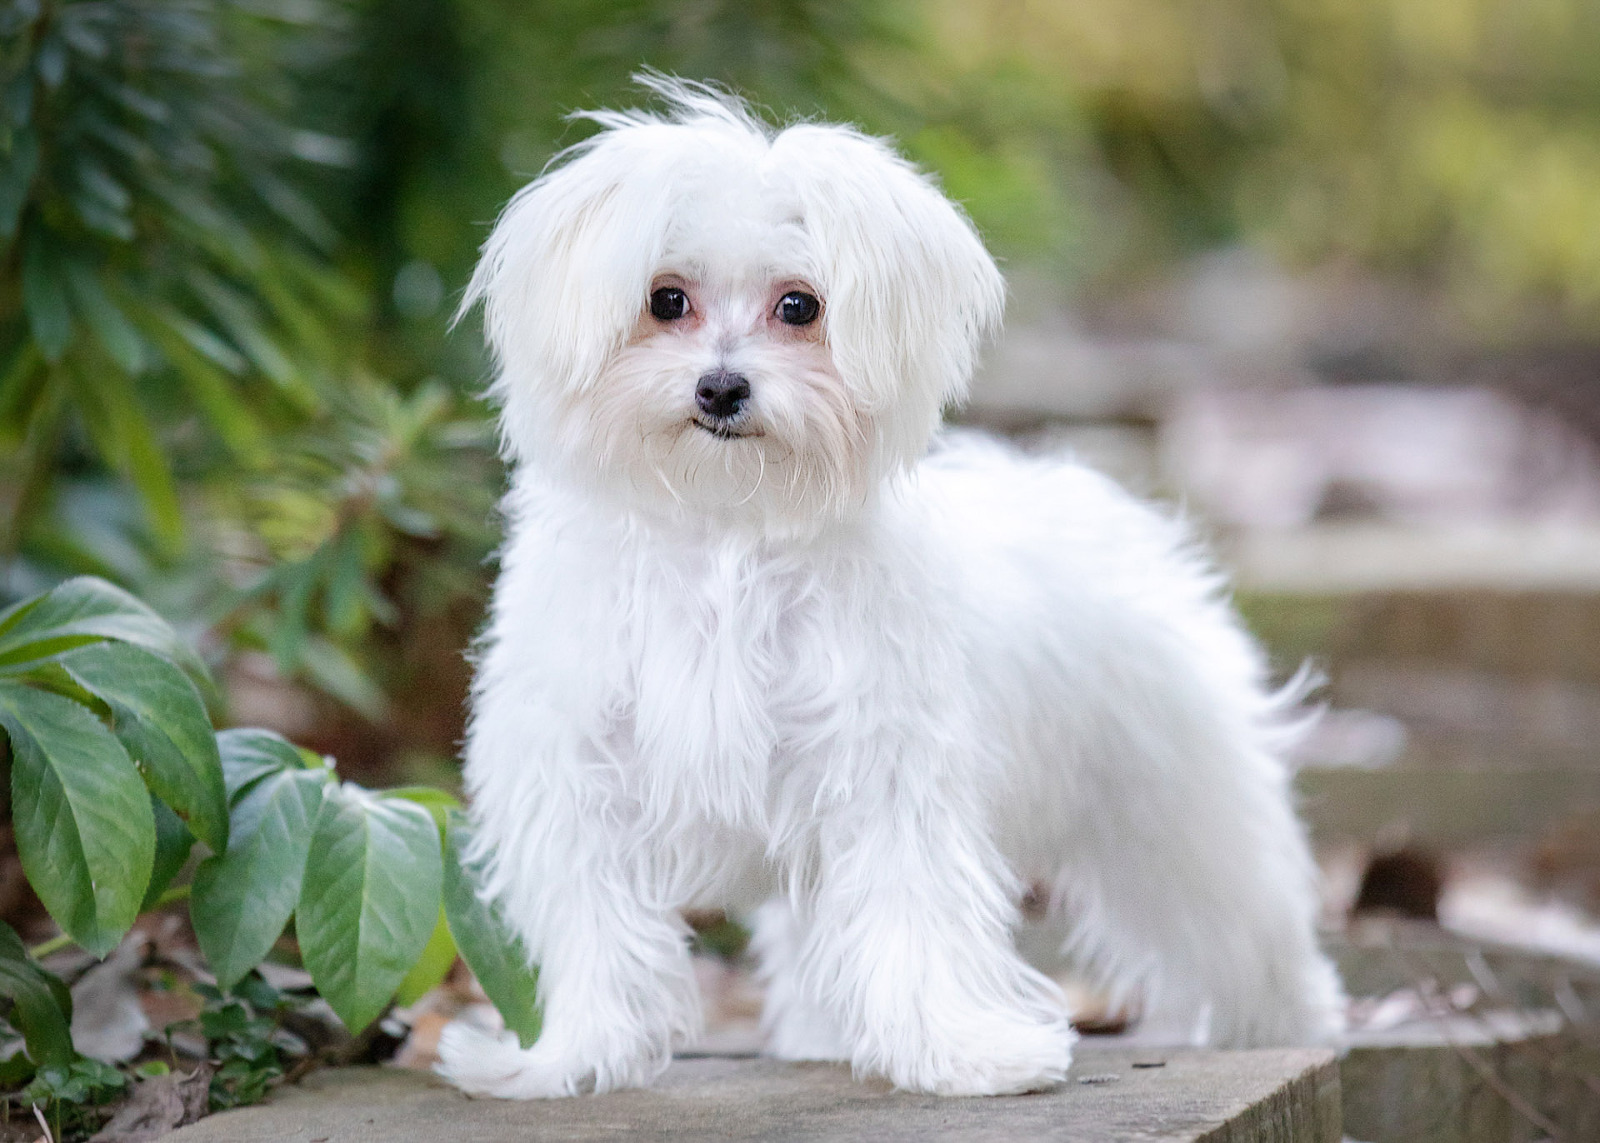 Maltese dog pet photography picture by Irene Gardner in Birmingham, Alabama